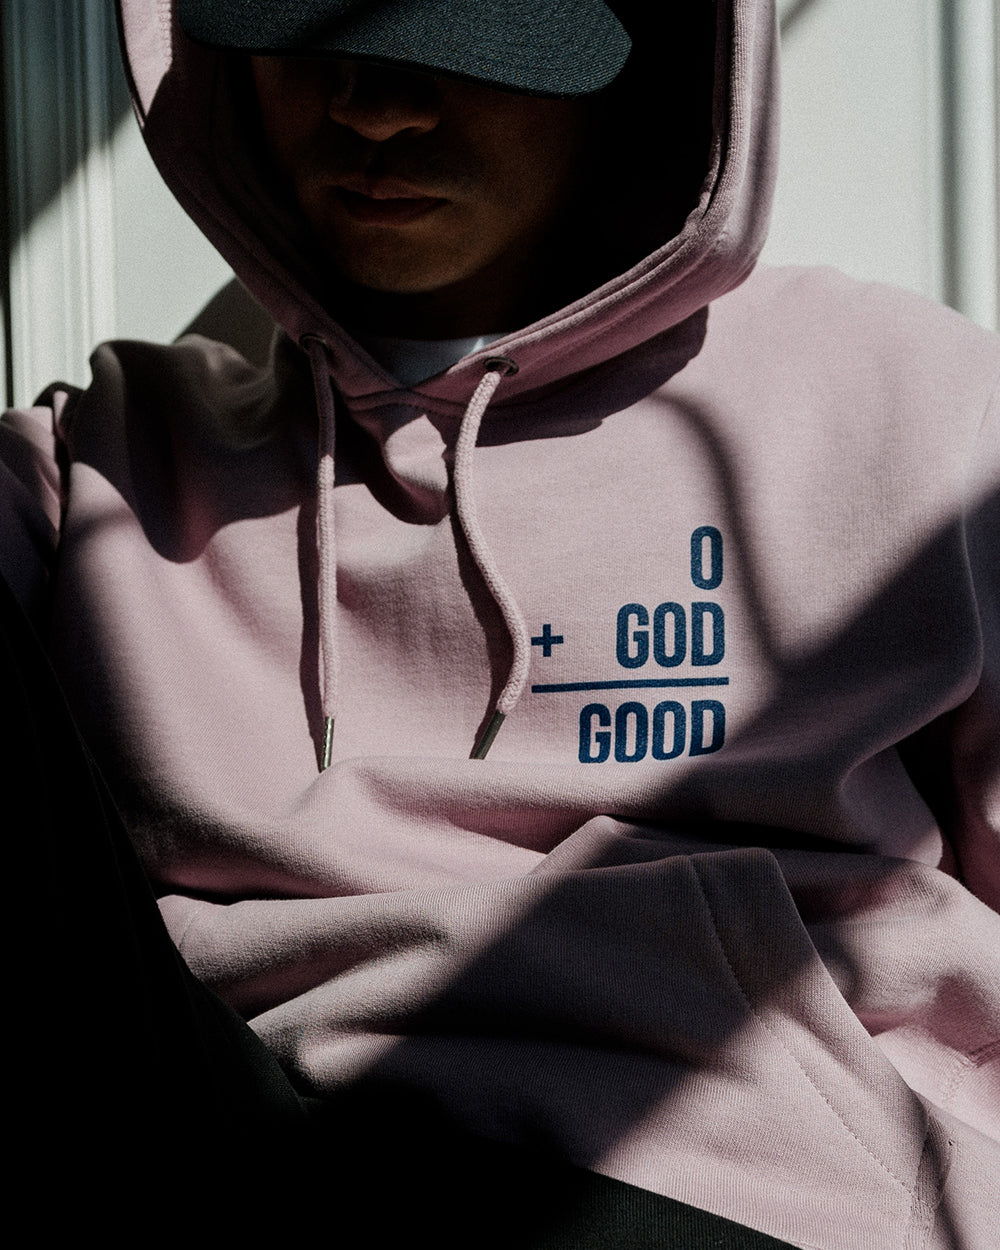 Lavender 0+GOD Organic Cotton Hooded Sweatshirt